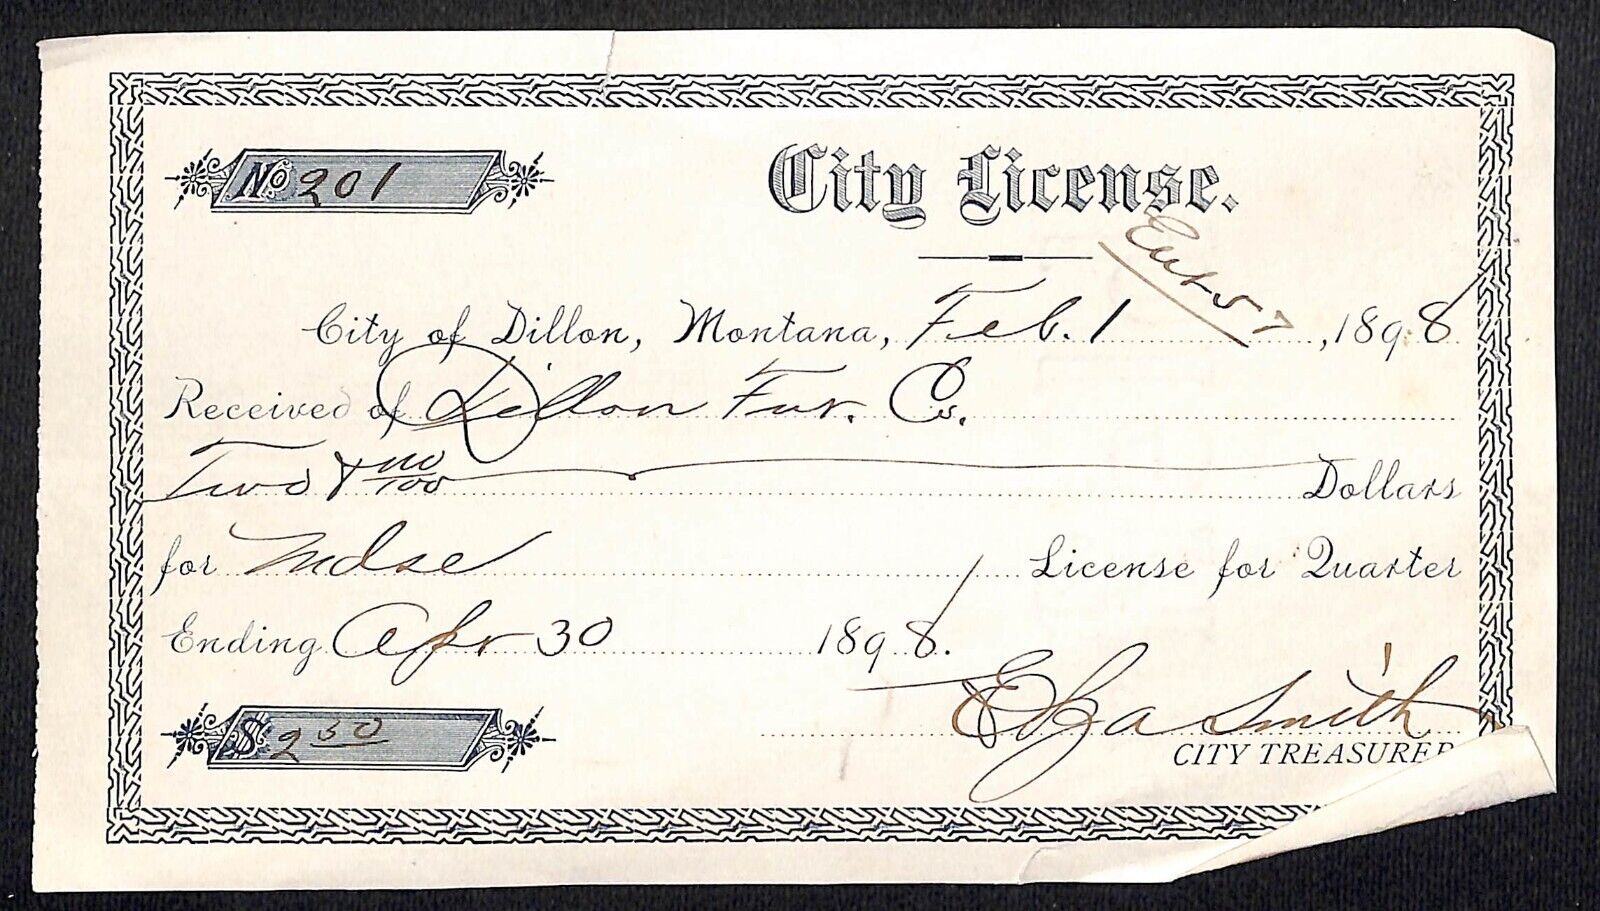 Dillon Montana 1898 City (Business) License Receipt for 